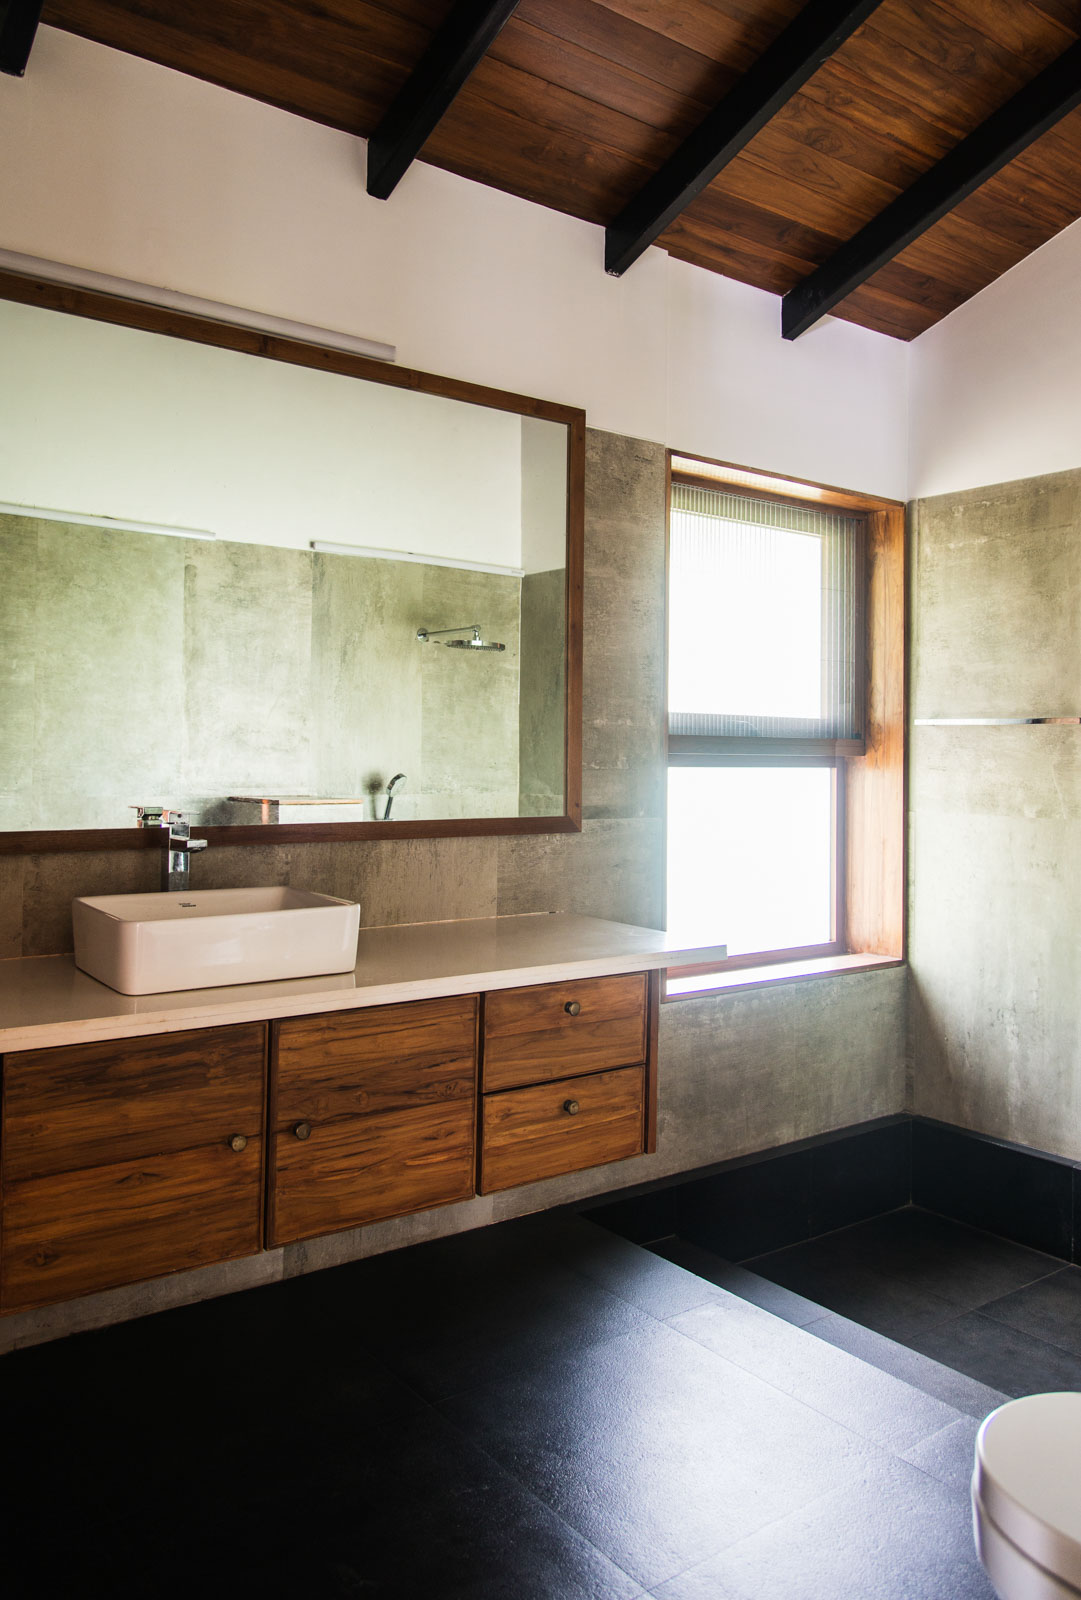 Minimalistic bathroom with wooden storage and big mirror, dark floor and one window